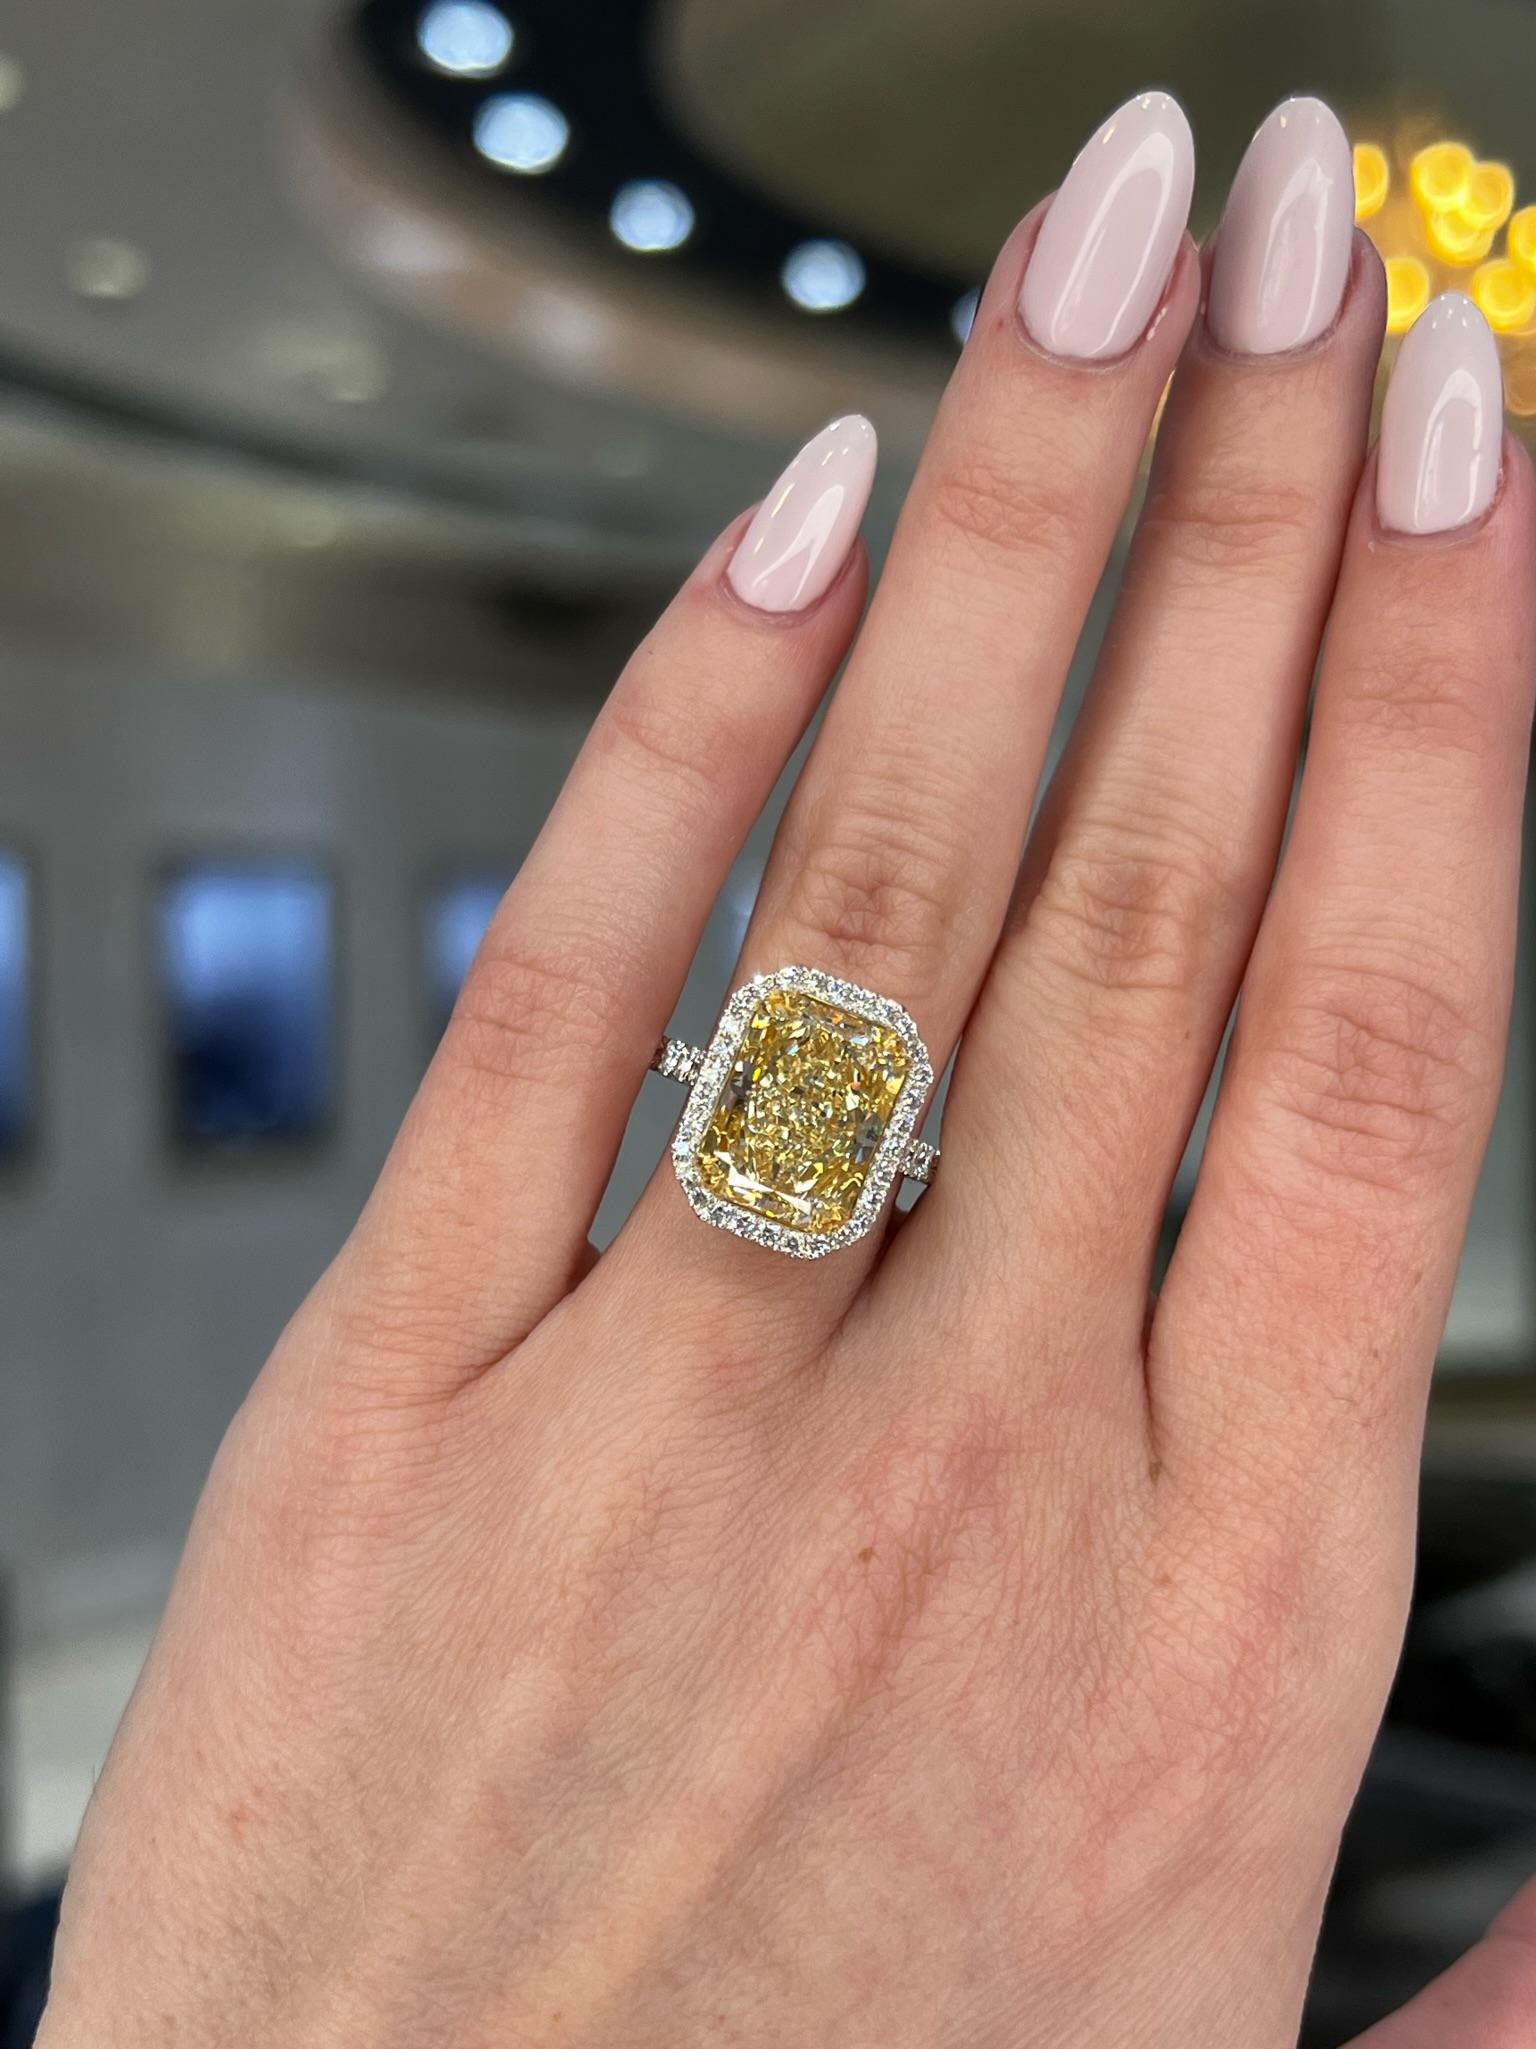 David Rosenberg 6.54 Ct Radiant Light Yellow GIA Diamond Engagement Ring For Sale 8